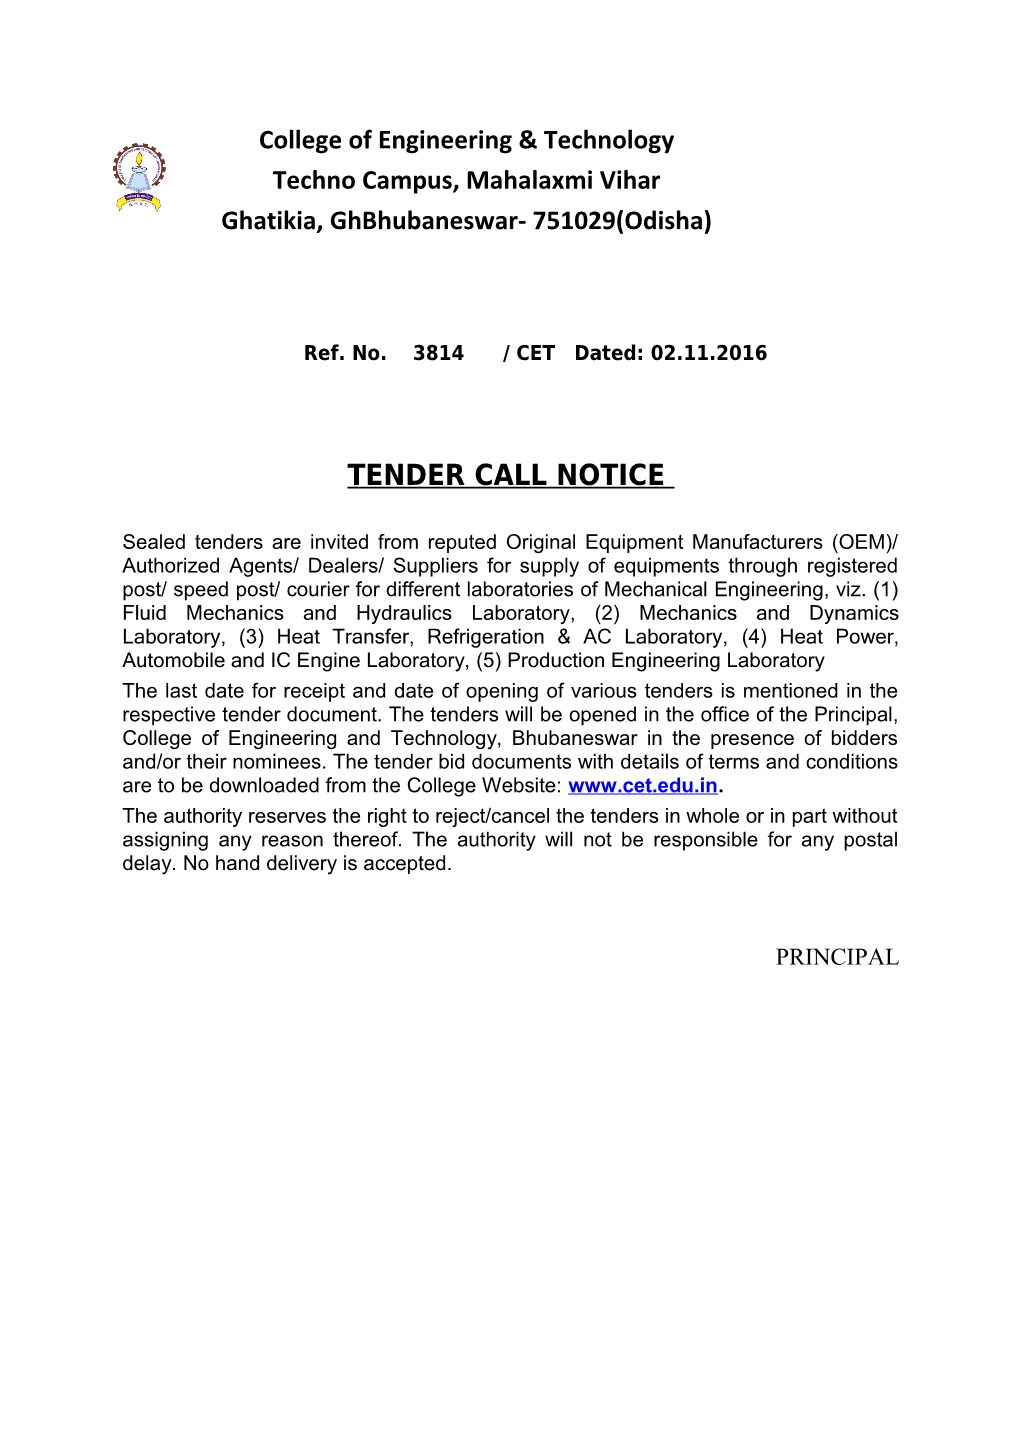 Tender Call Notice